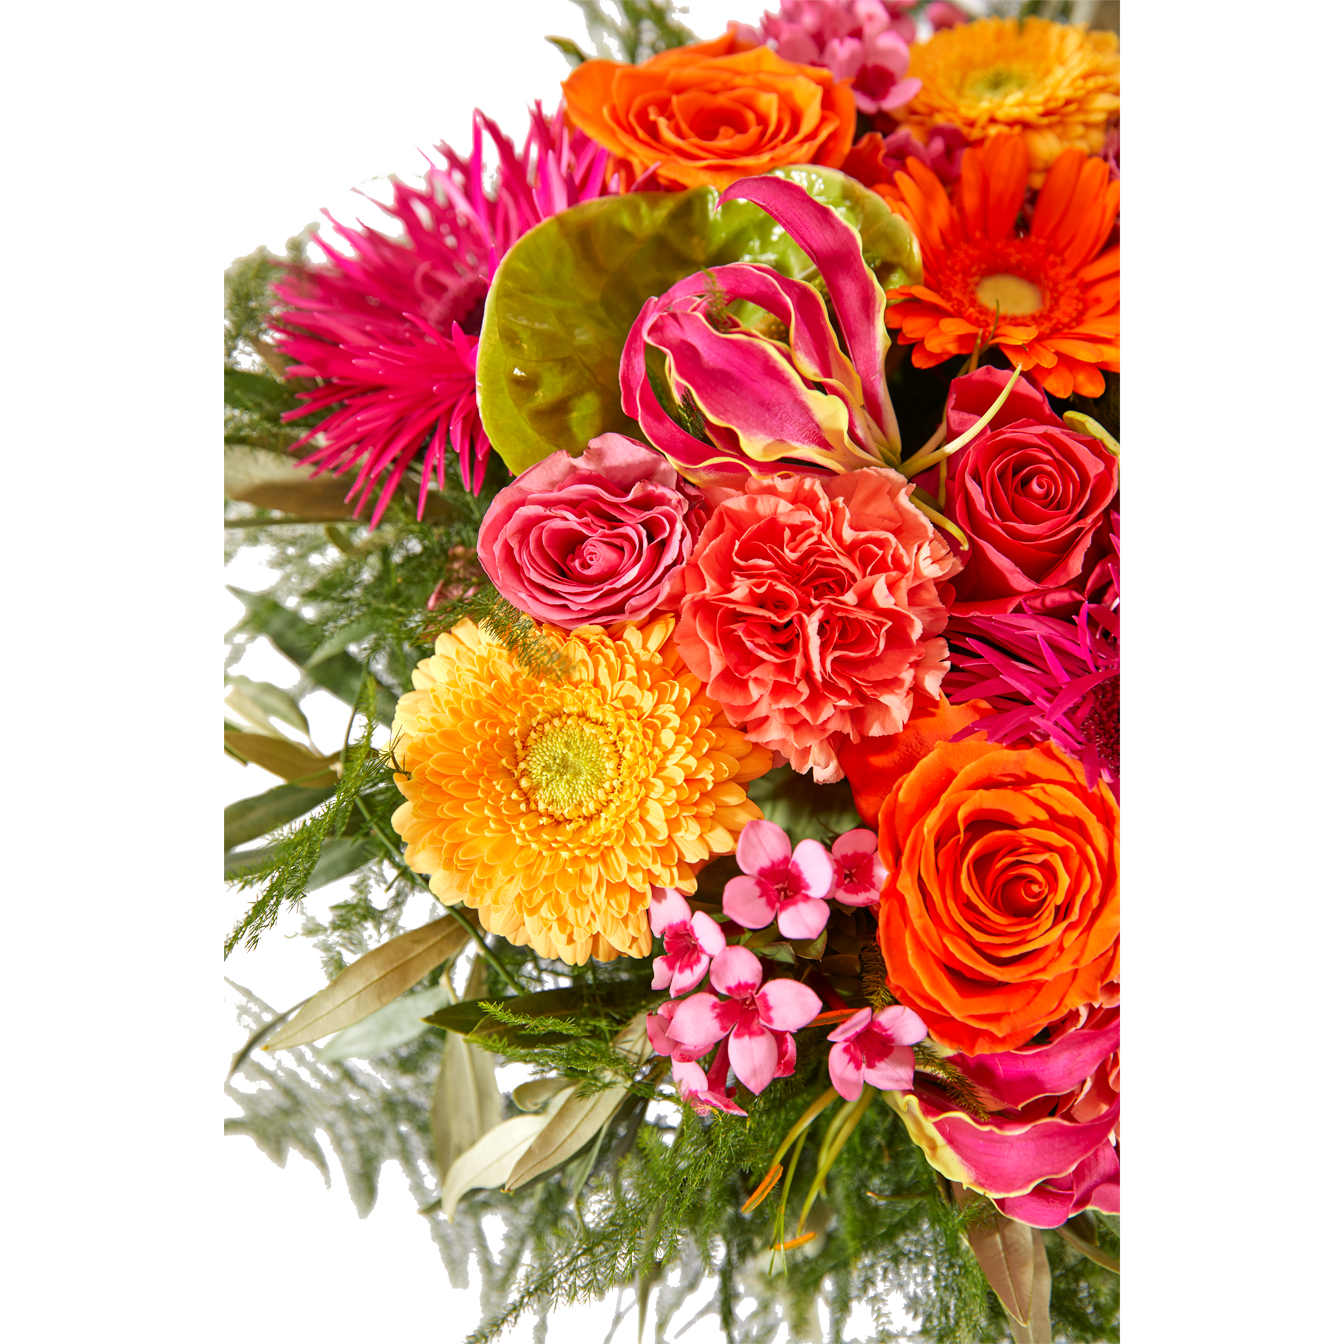 product image for Arrangement of cut flowers